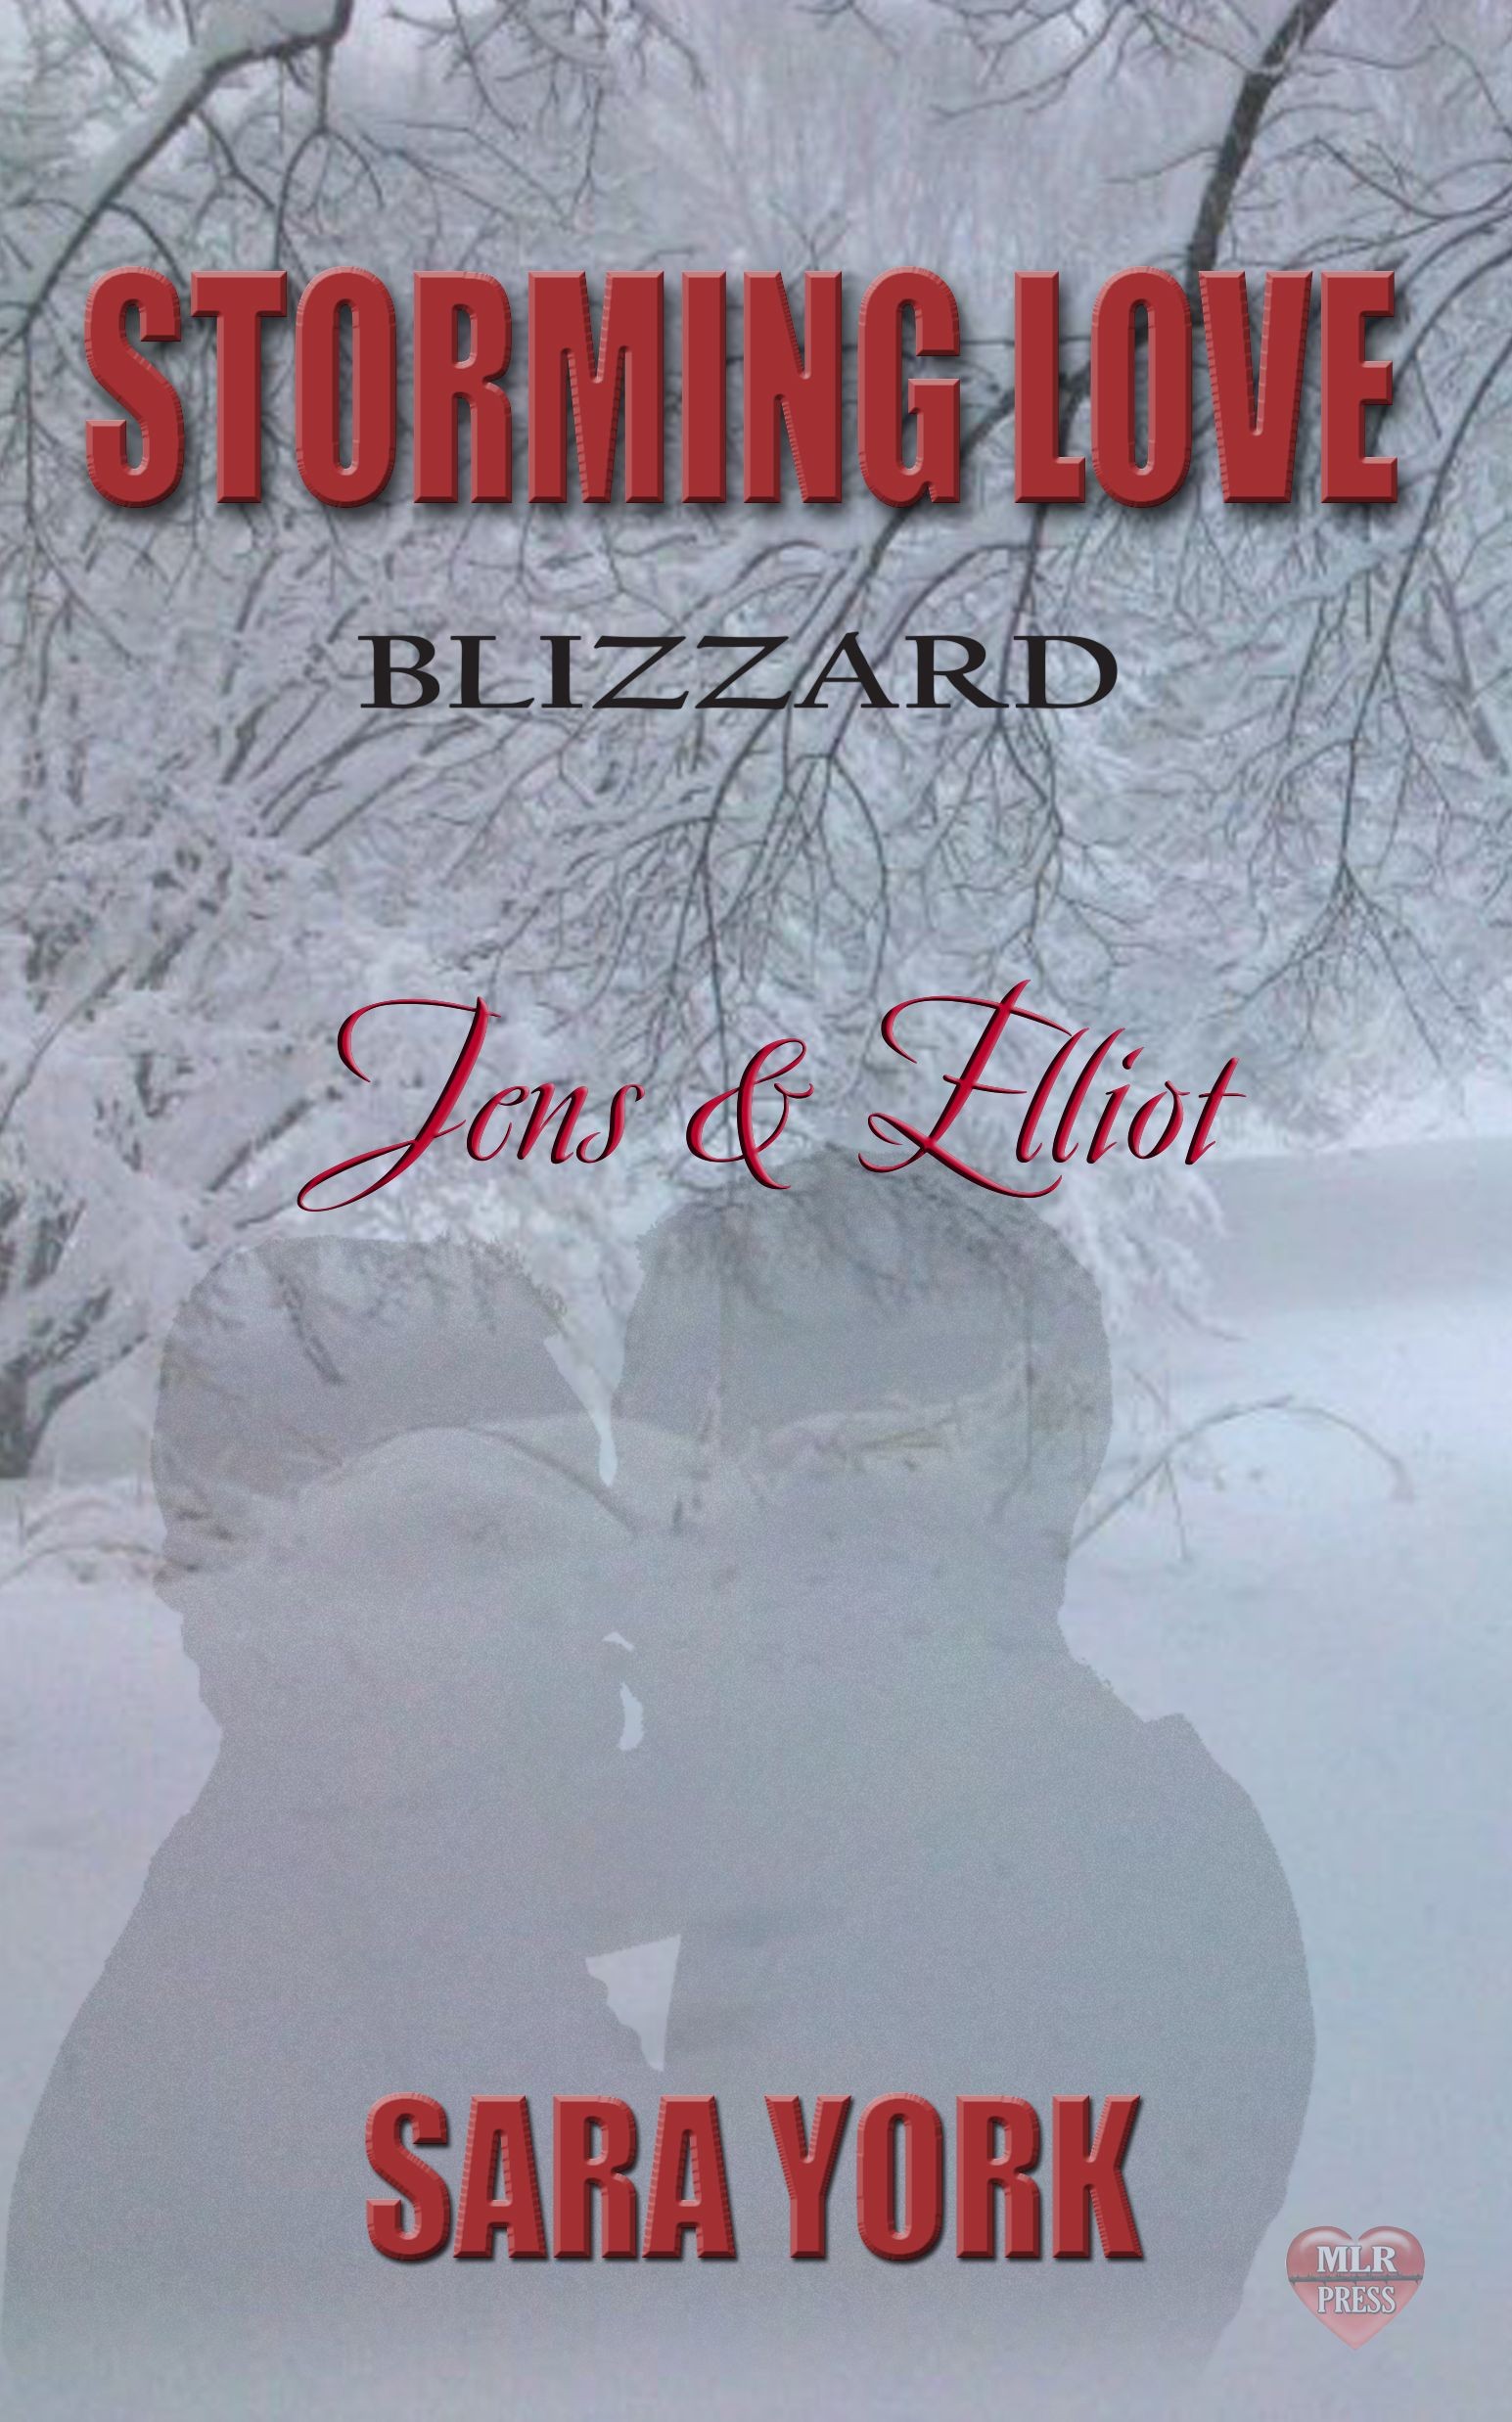 StormingLove Blizzard JensElliot (2015) by Sara York